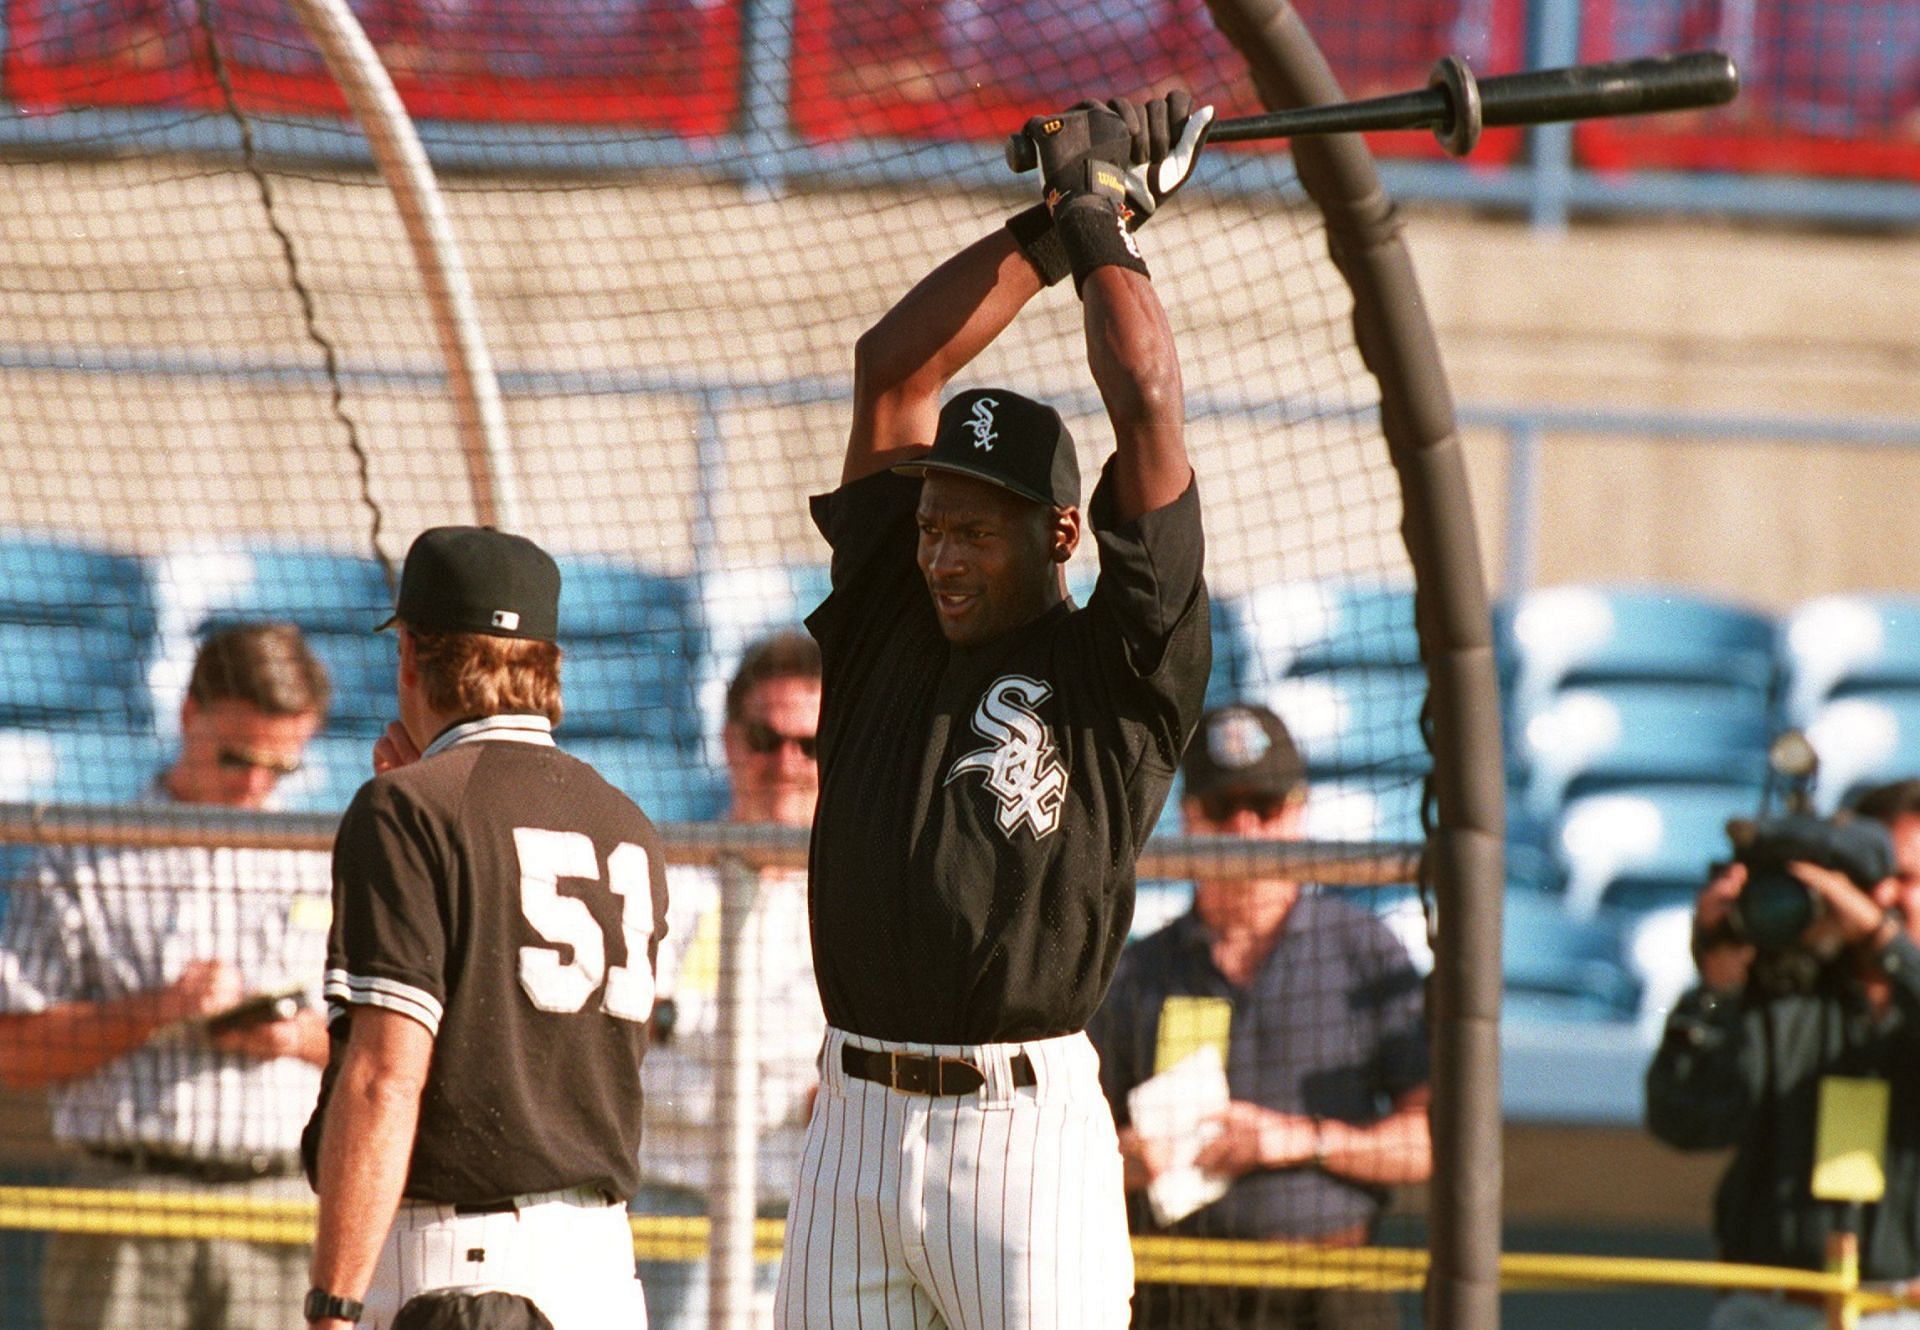 Michael Jordan playing baseball in the minor league.